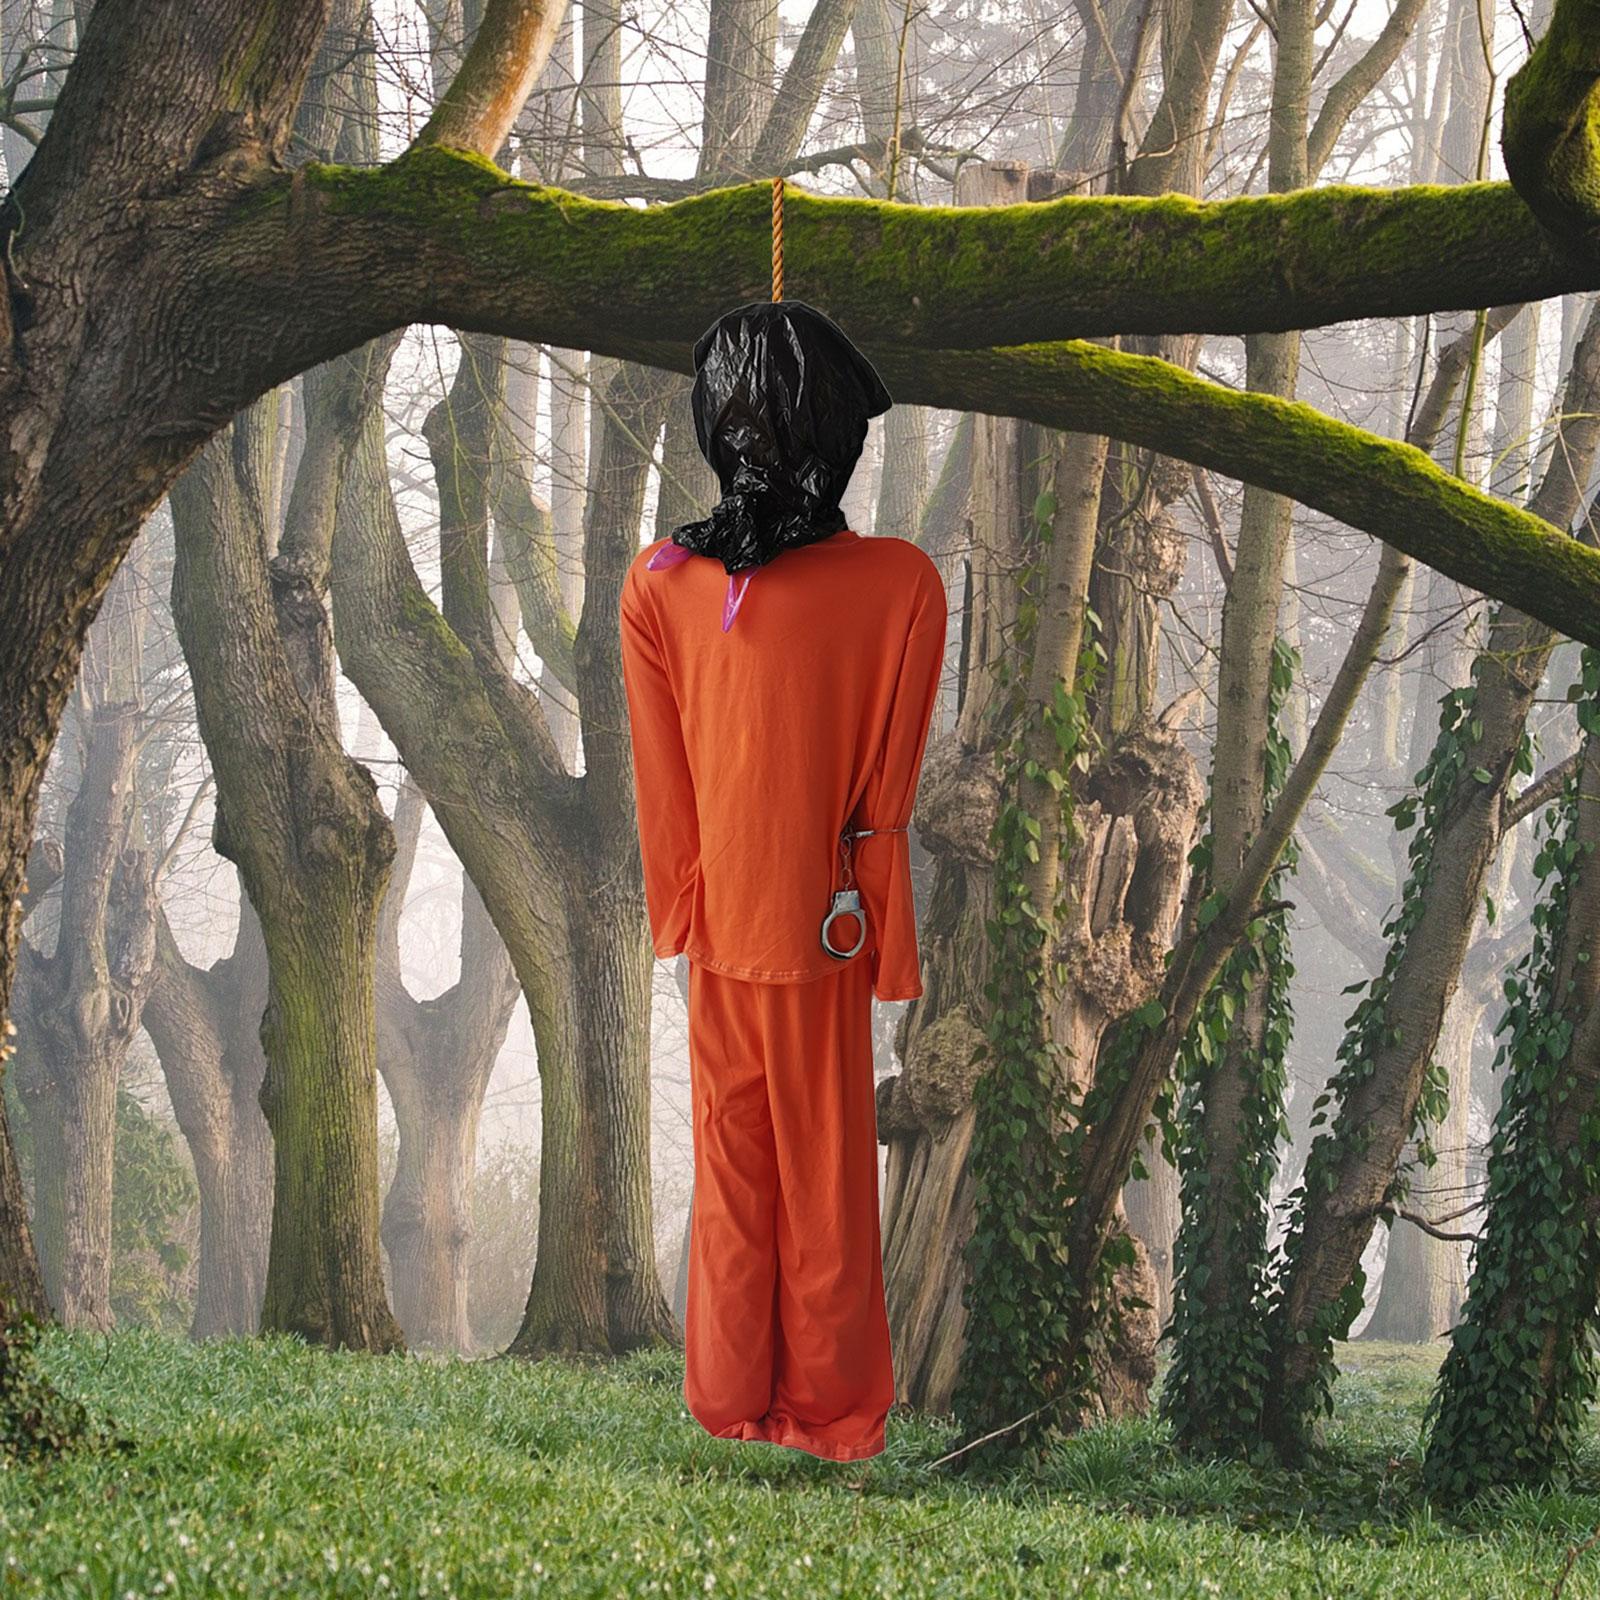 Halloween Handcuffed Orange Prison Uniform Spooky Prisoner Horror Atmosphere